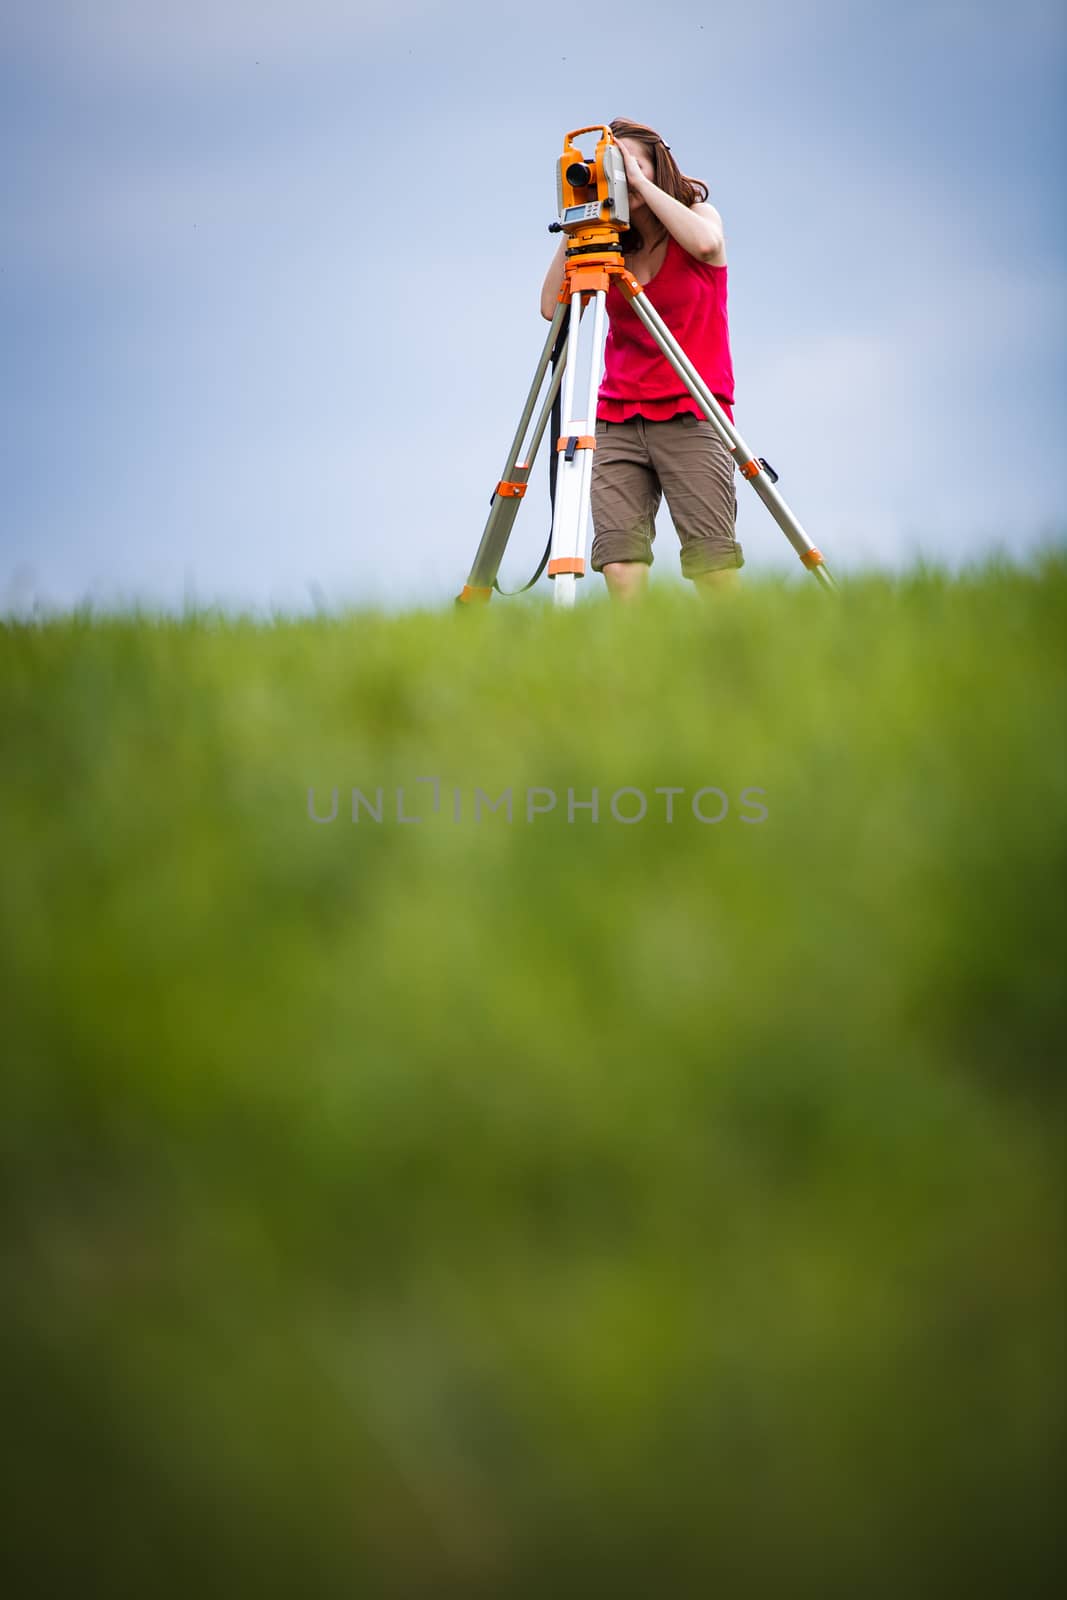 Young, female land surveyor at work - using the theodolite level outdoors